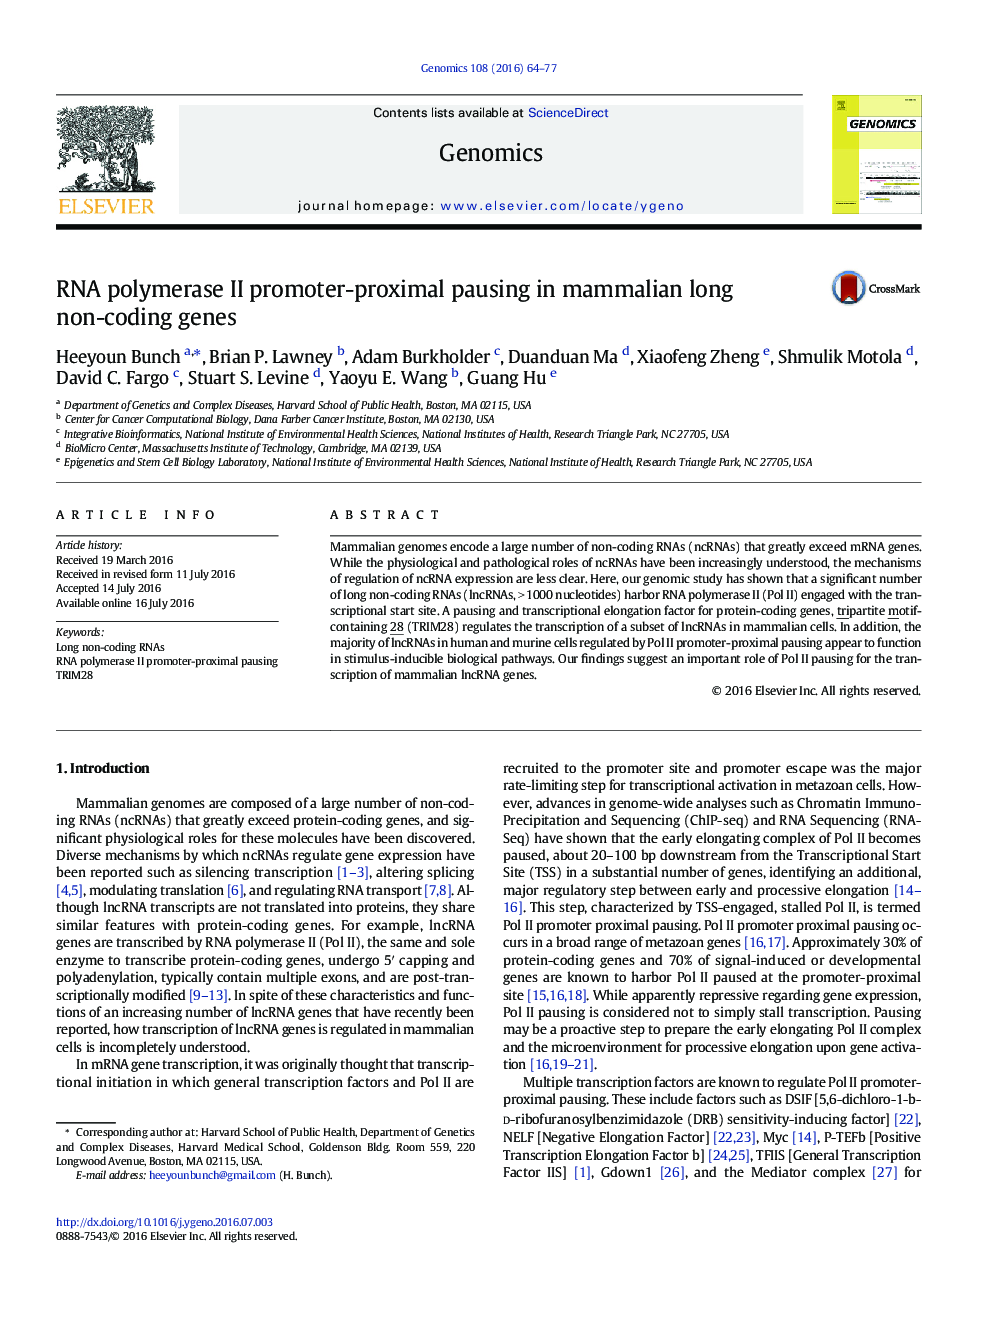 RNA polymerase II promoter-proximal pausing in mammalian long non-coding genes